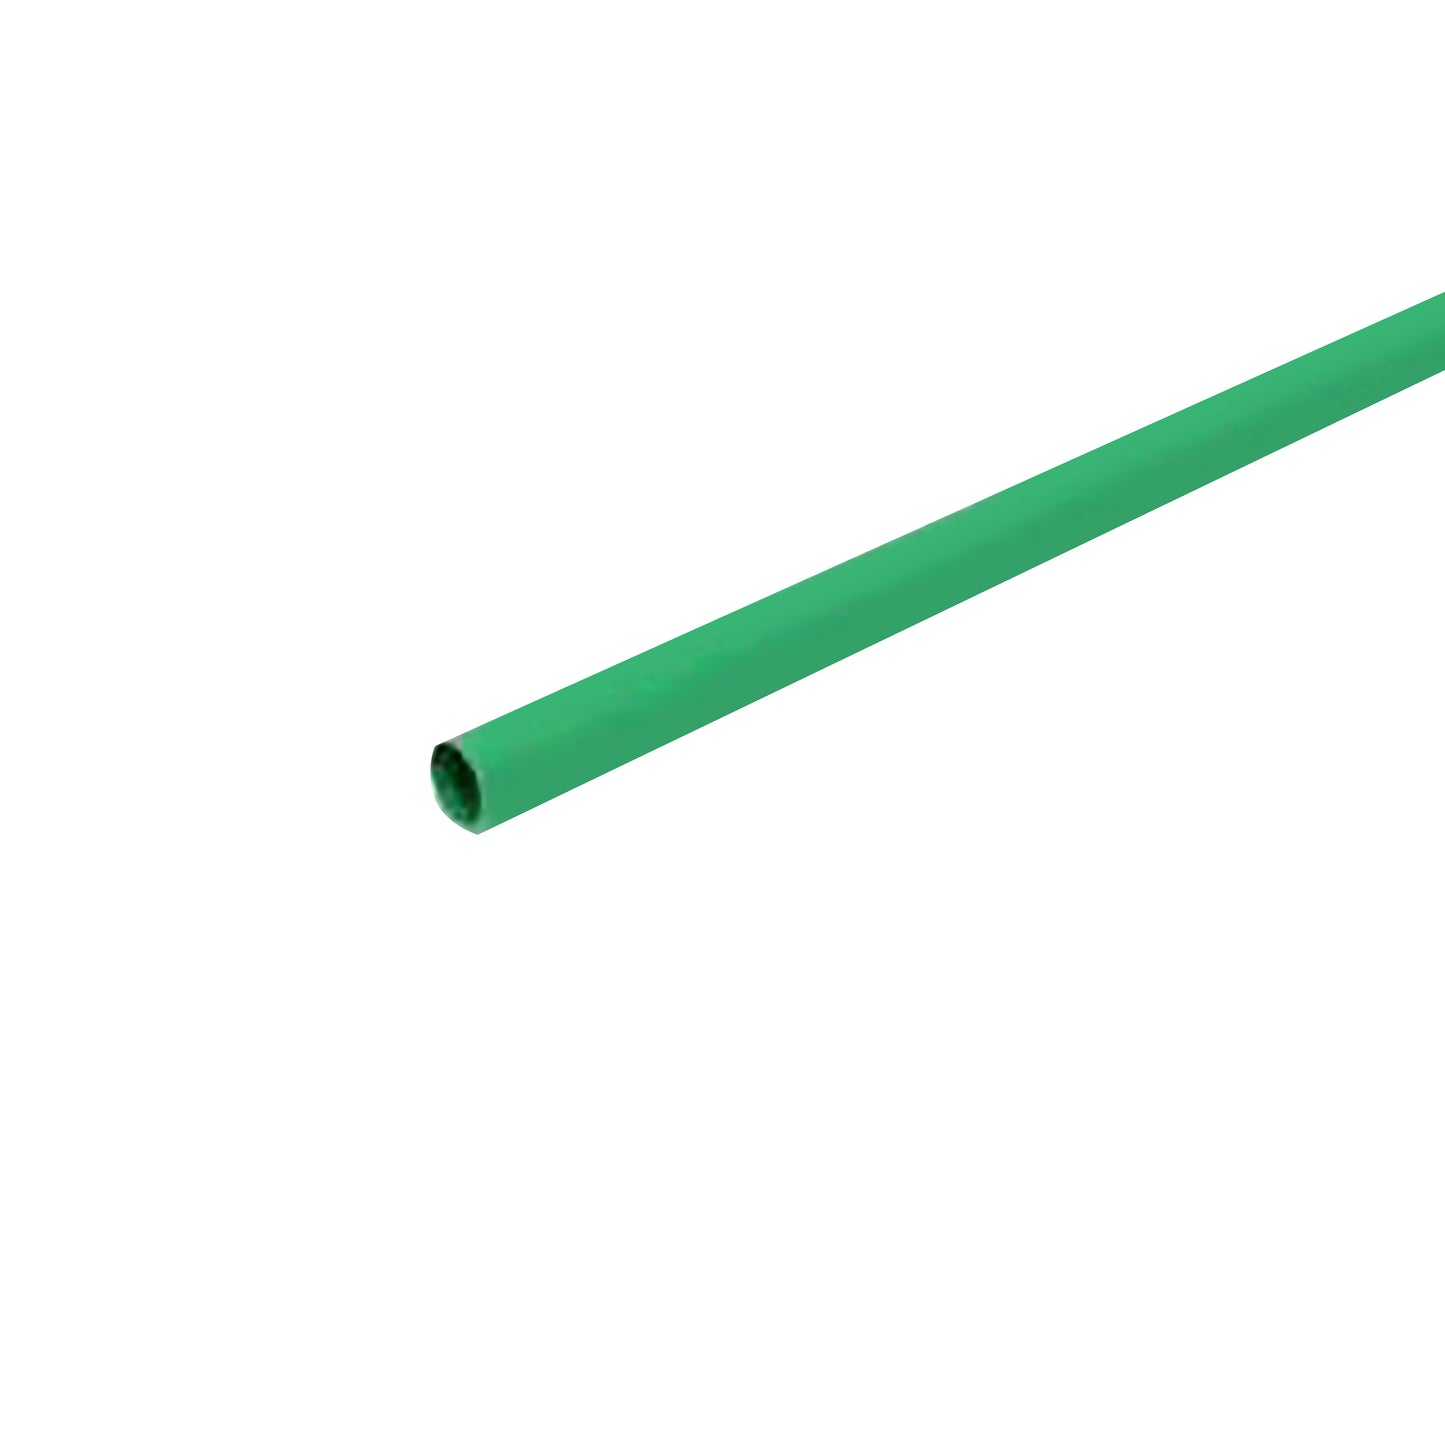 Flexible Thin Single Wall Non-Adhesive Heat Shrink Tubing 2:1 Green 1" ID - 50' Ft Spool